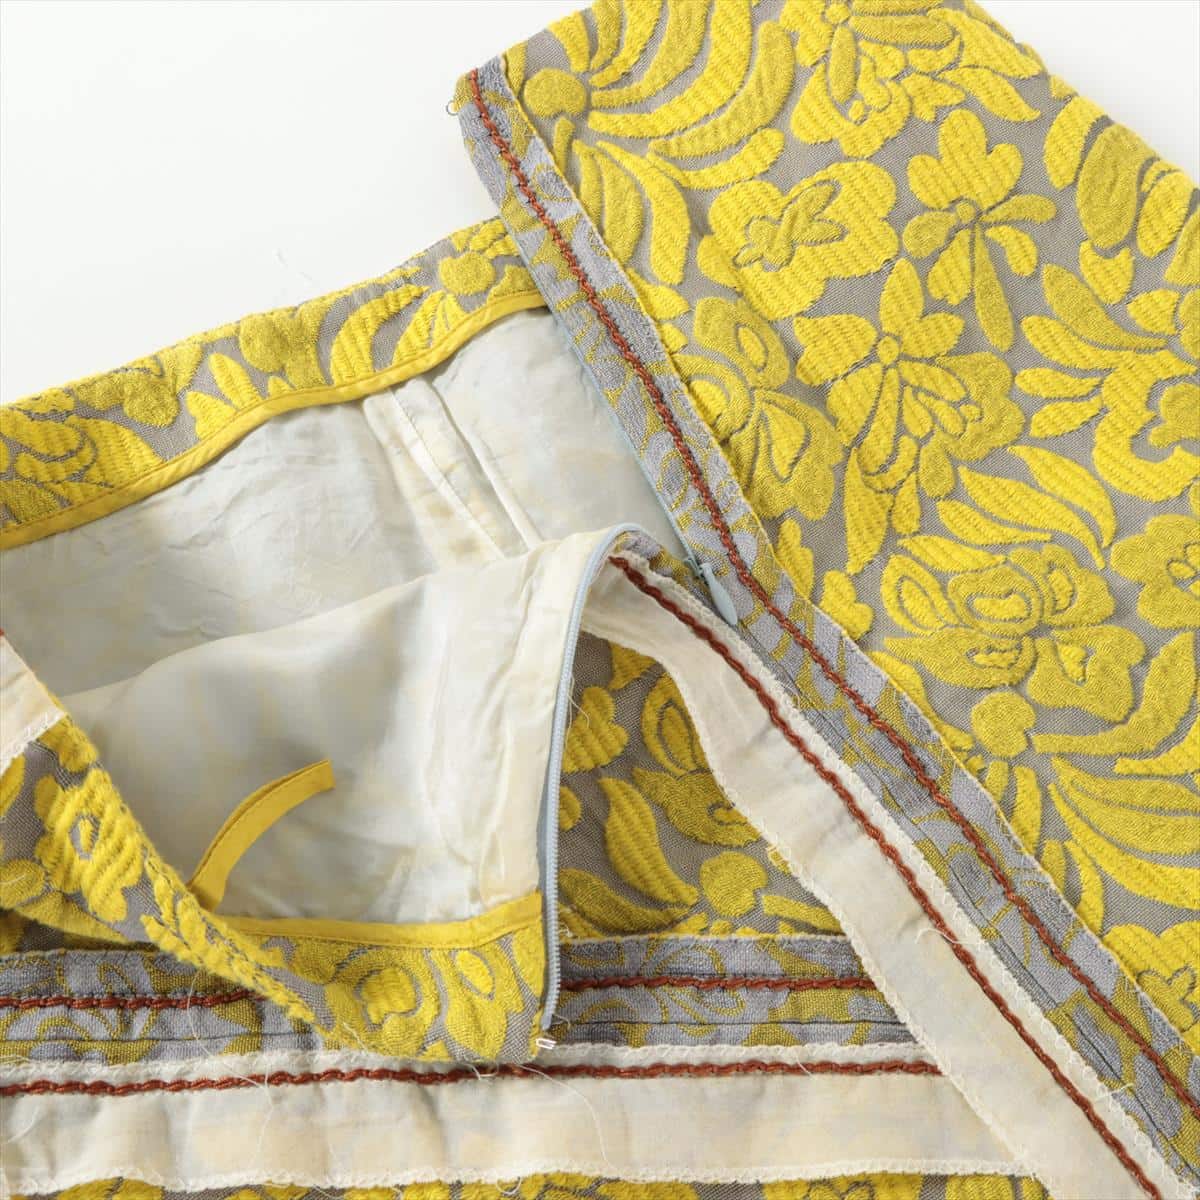 Prada 15SS Cotton & nylon Skirt 40 Ladies' Yellow